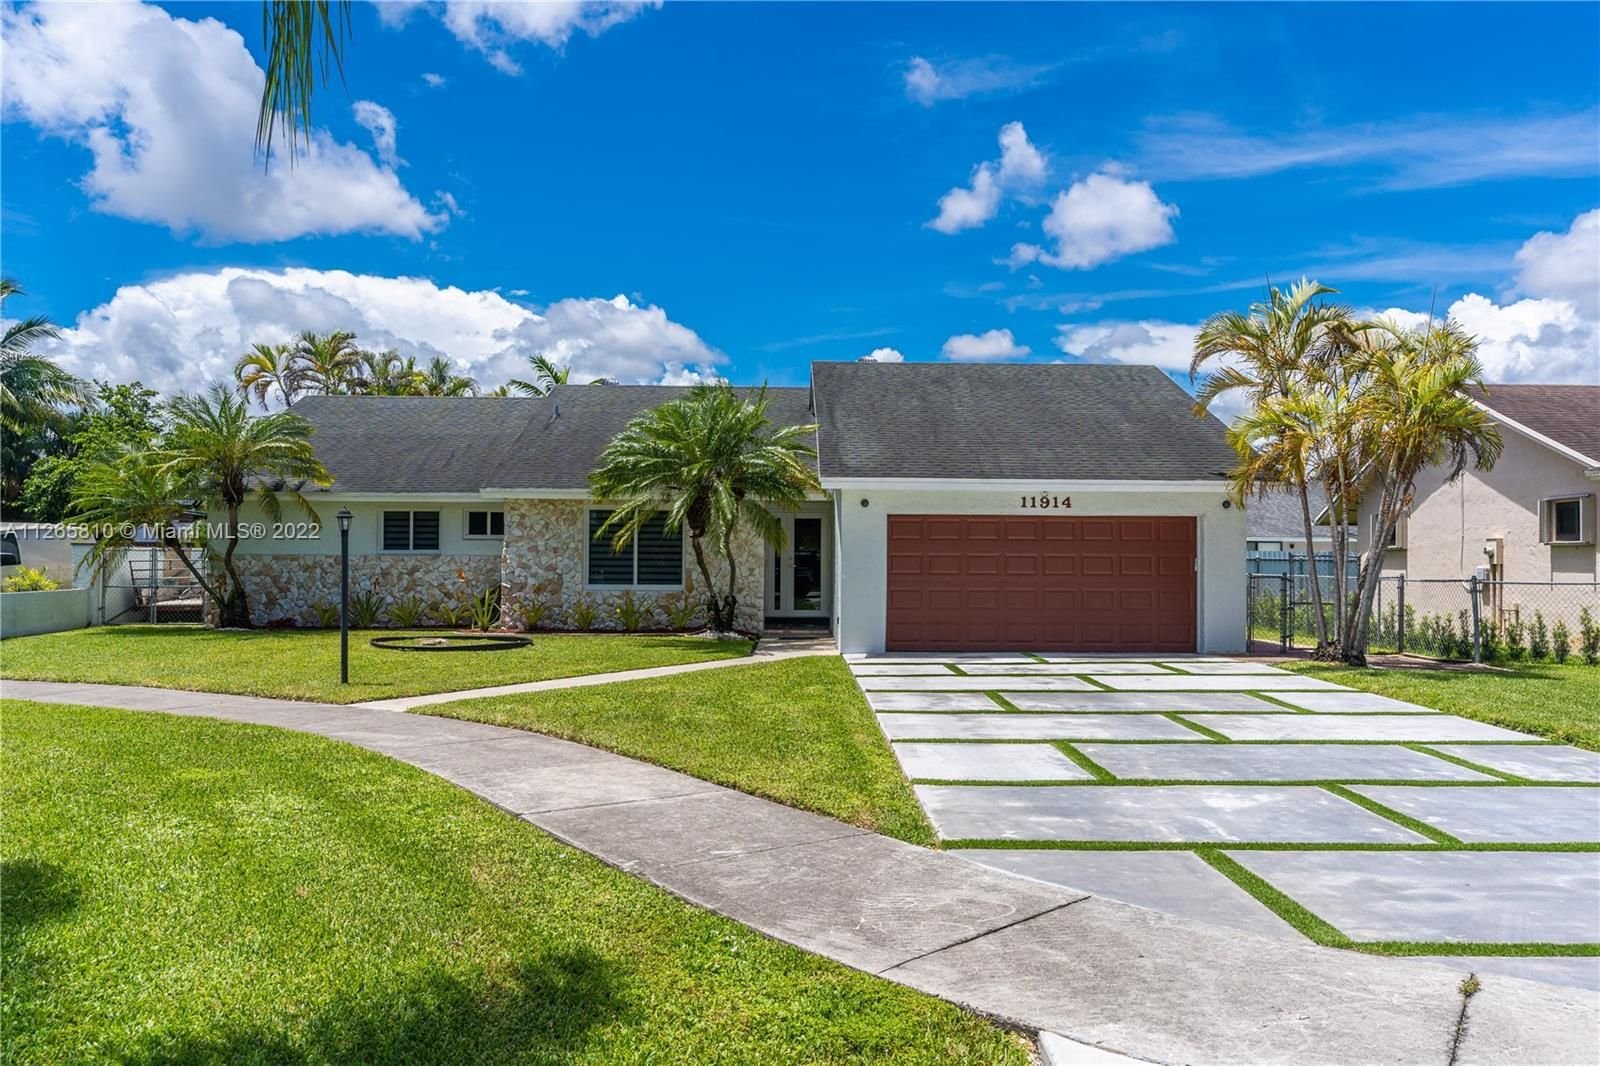 Real estate property located at 11914 130th Ct, Miami-Dade County, Miami, FL